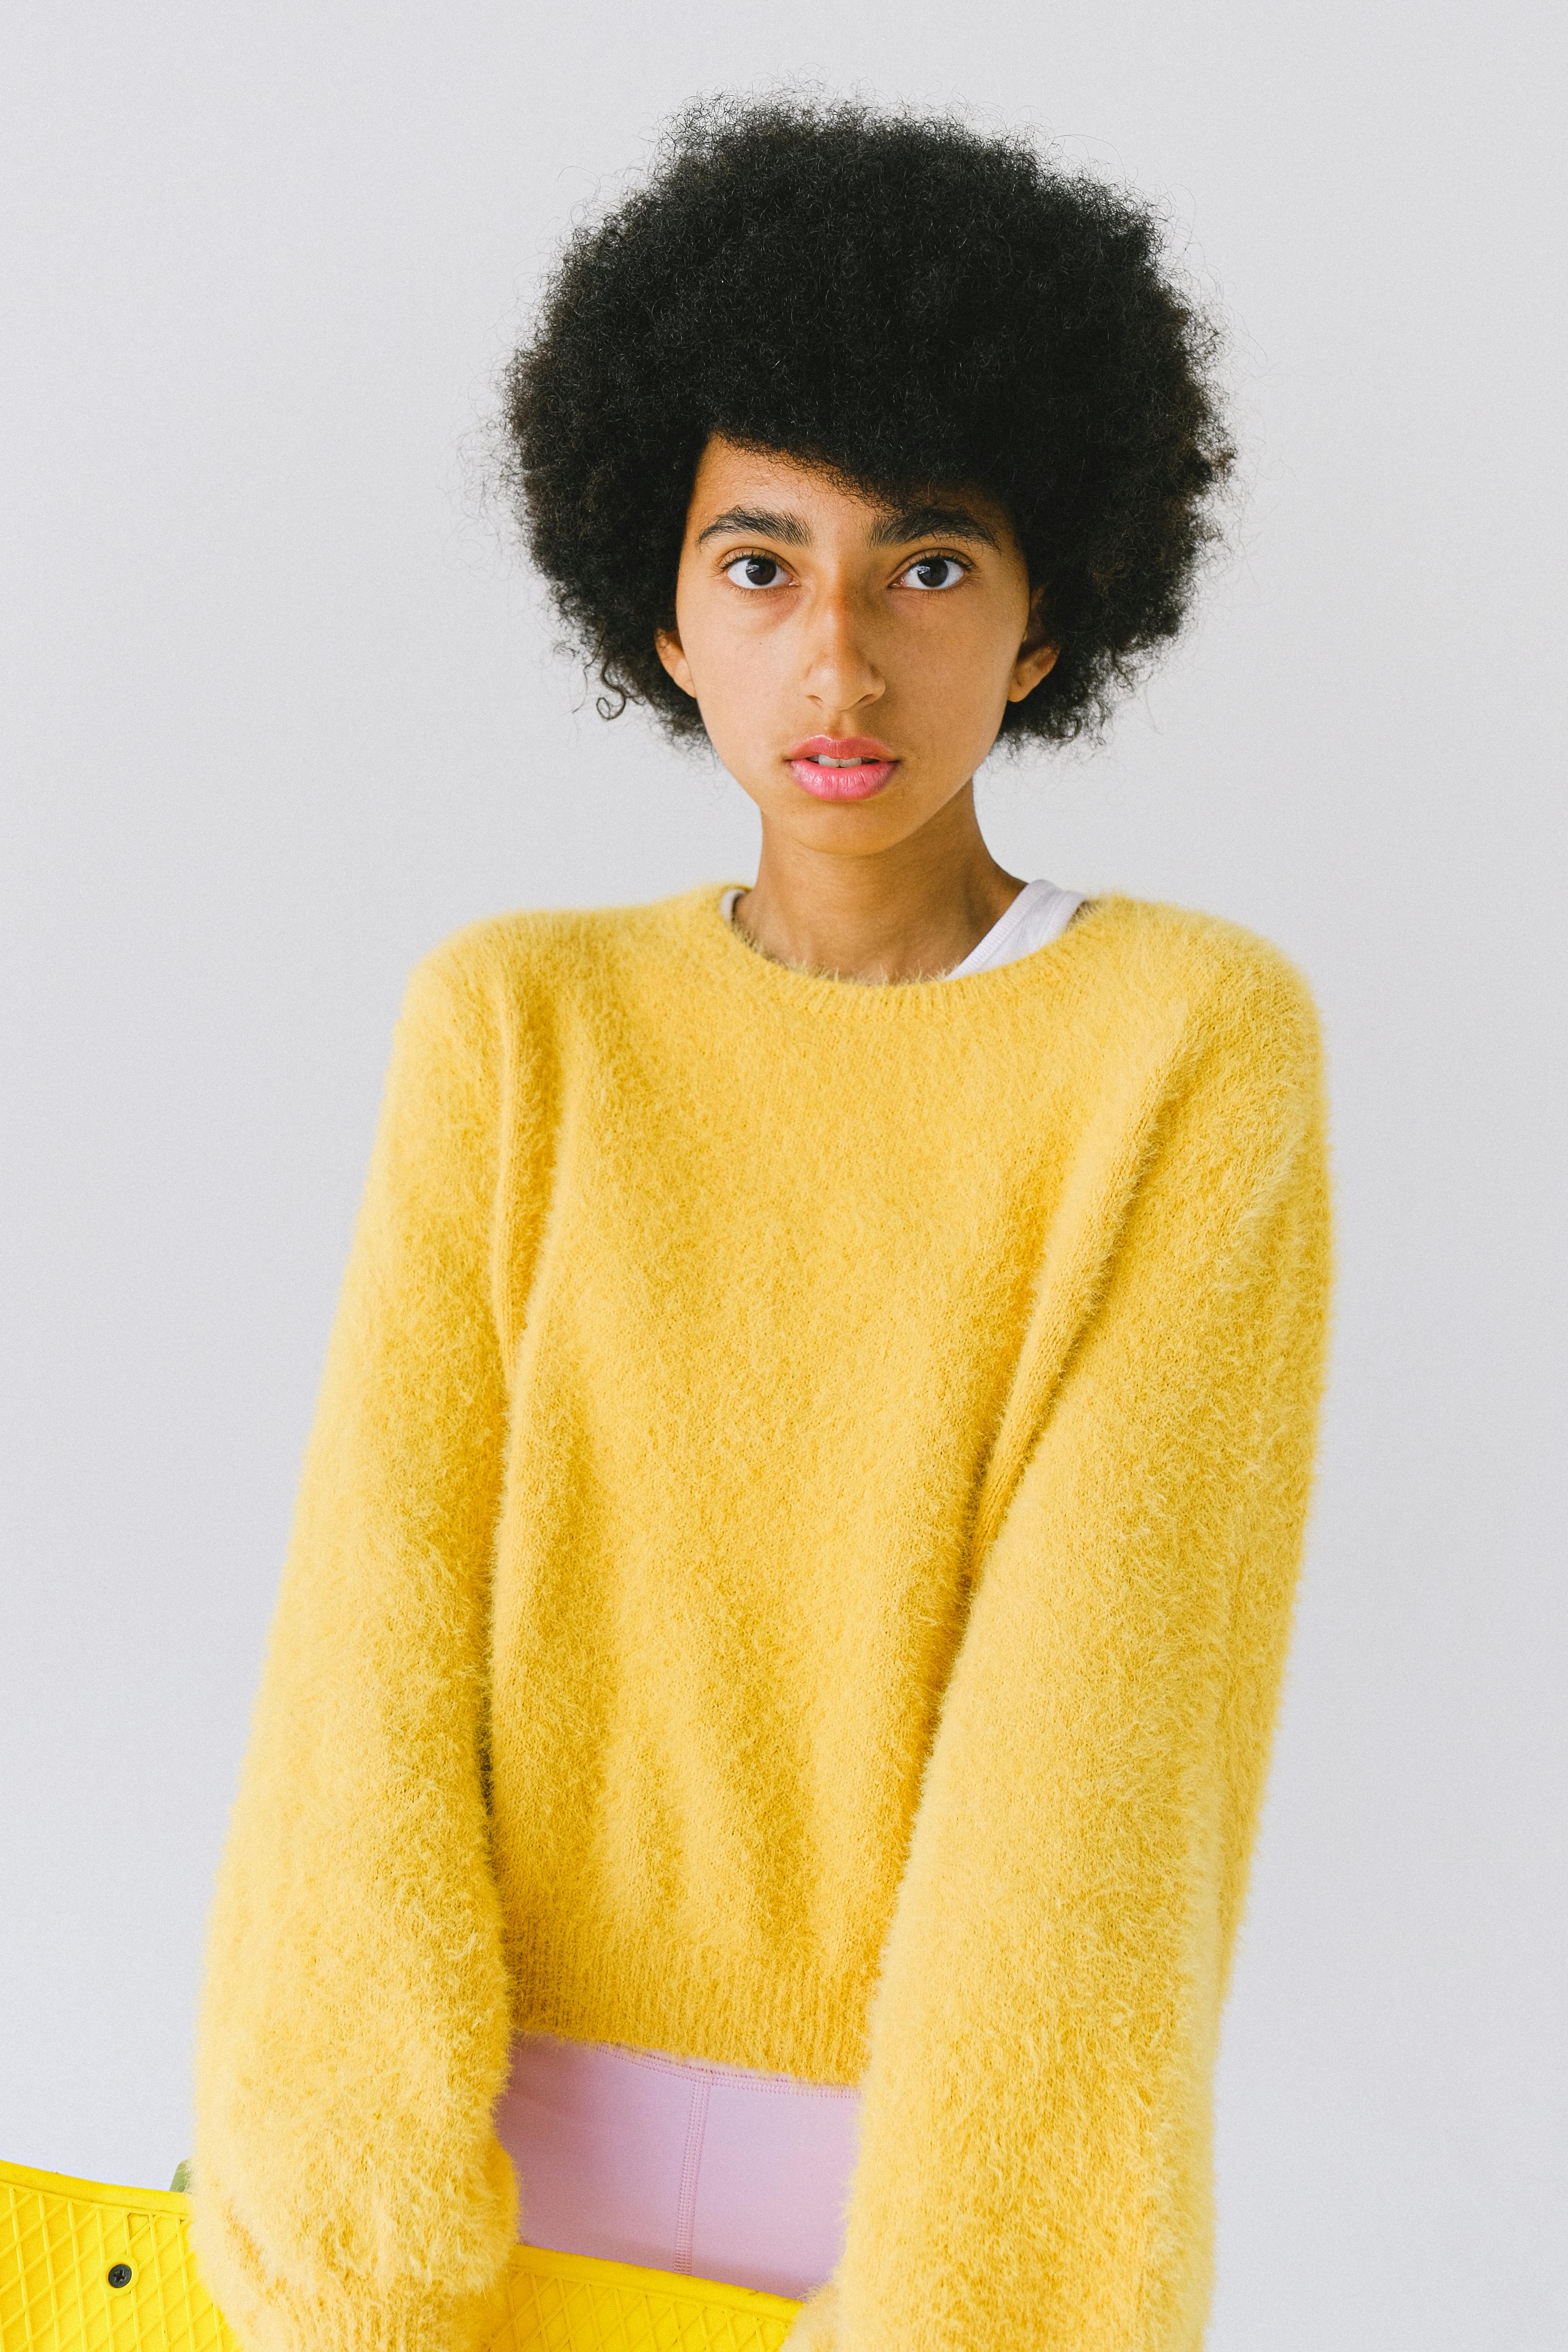 ethnic teen in bright yellow stylish sweater